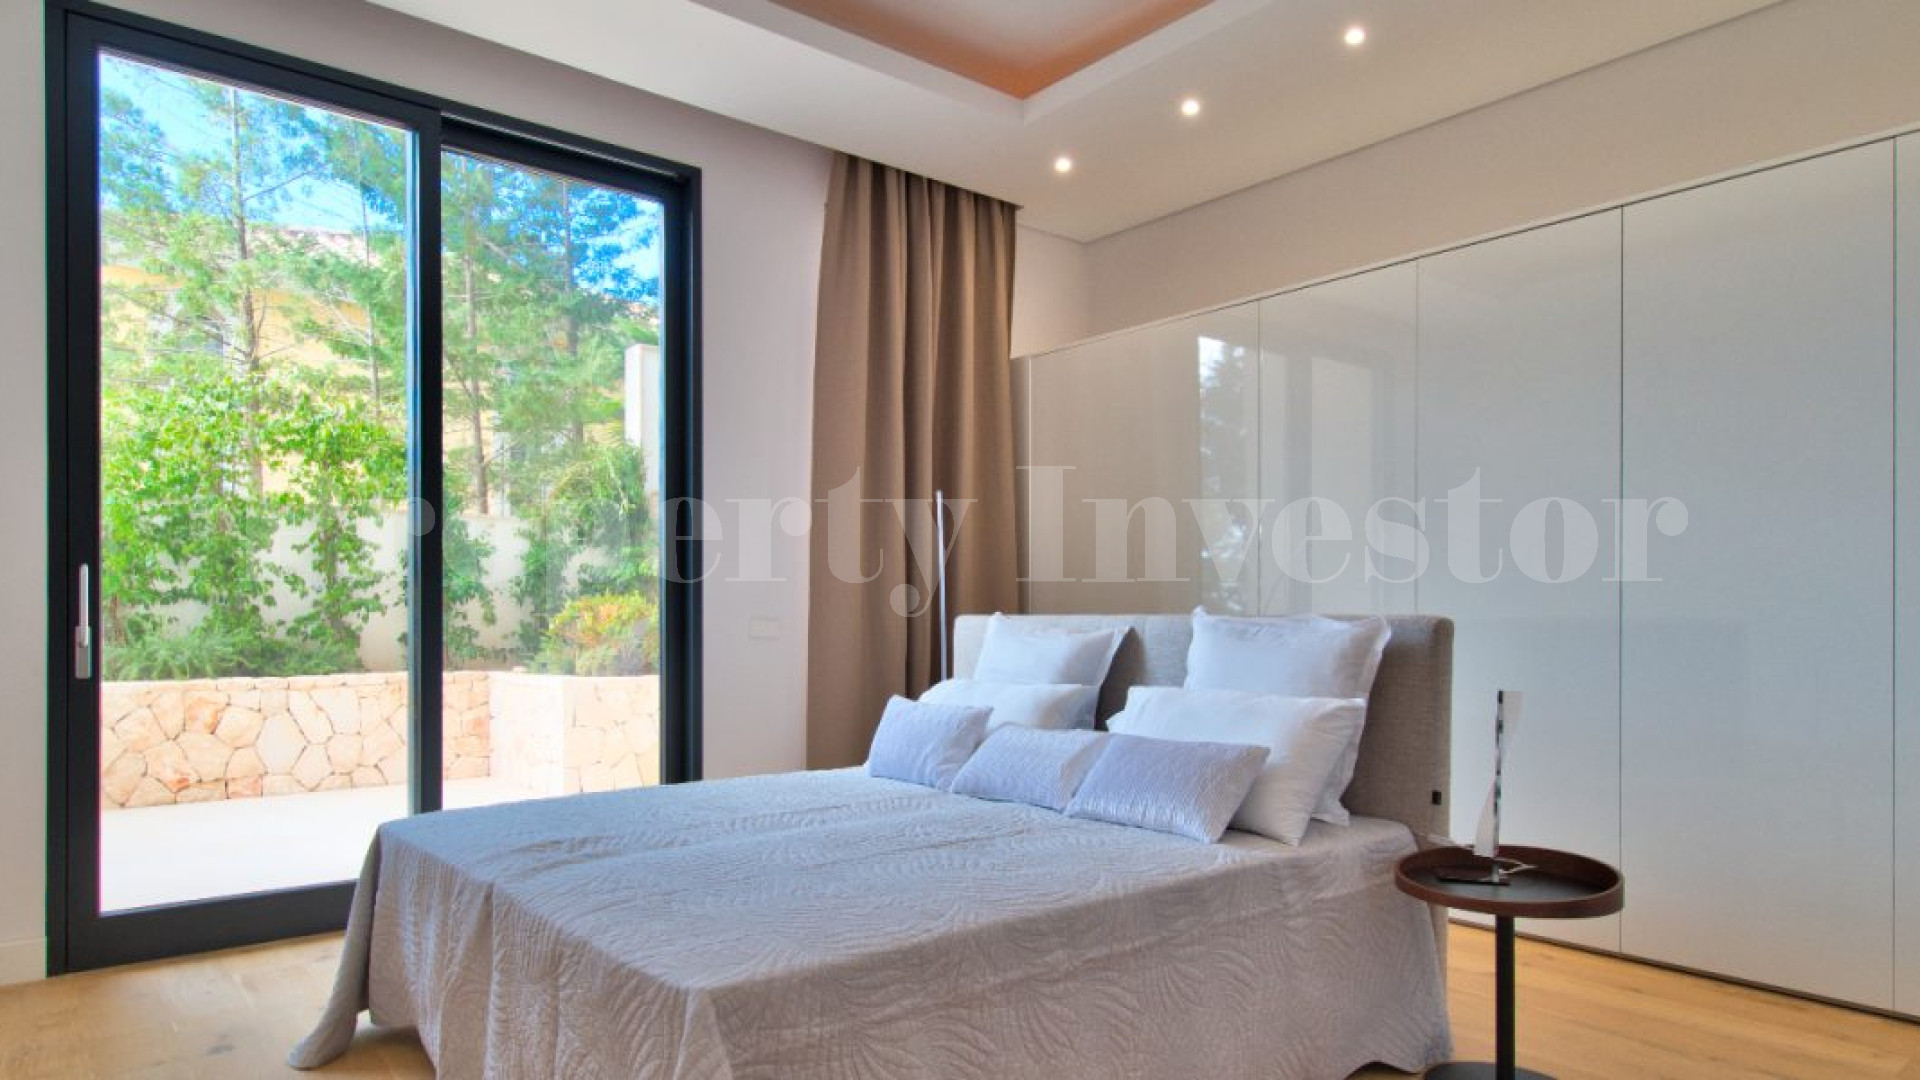 Impressive 8 Bedroom Luxury Sea View Villa Sought After Area of Port Andratx